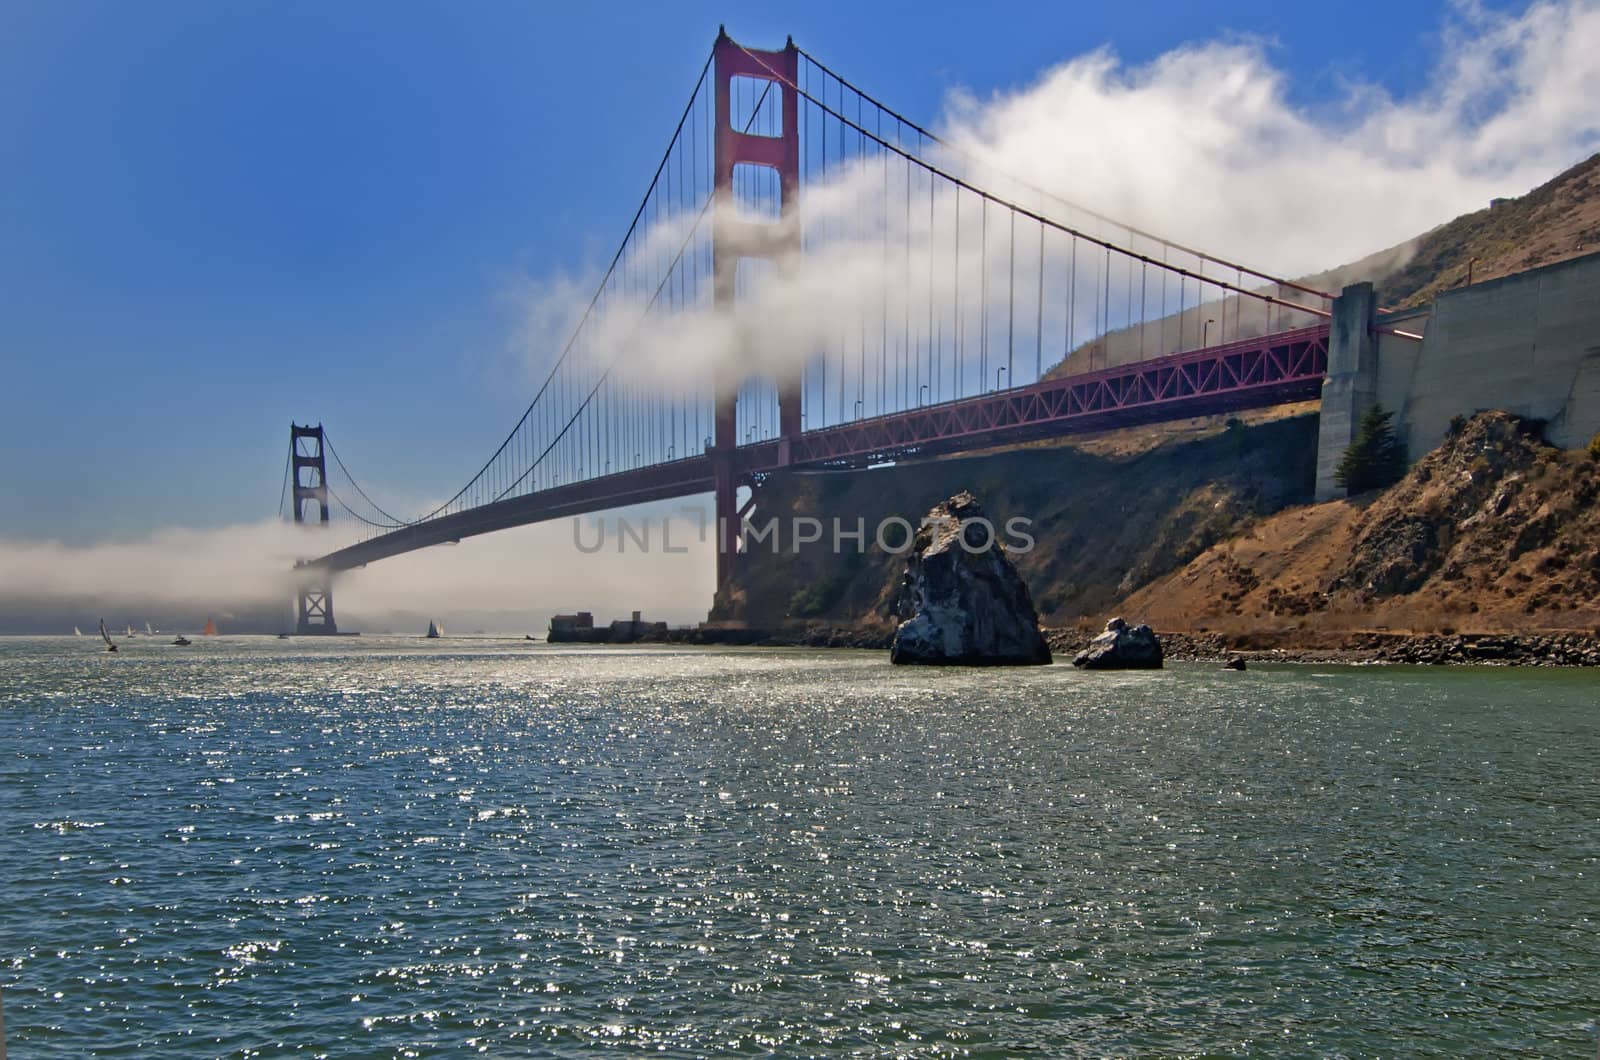 Golden Gate Bridge by urmoments